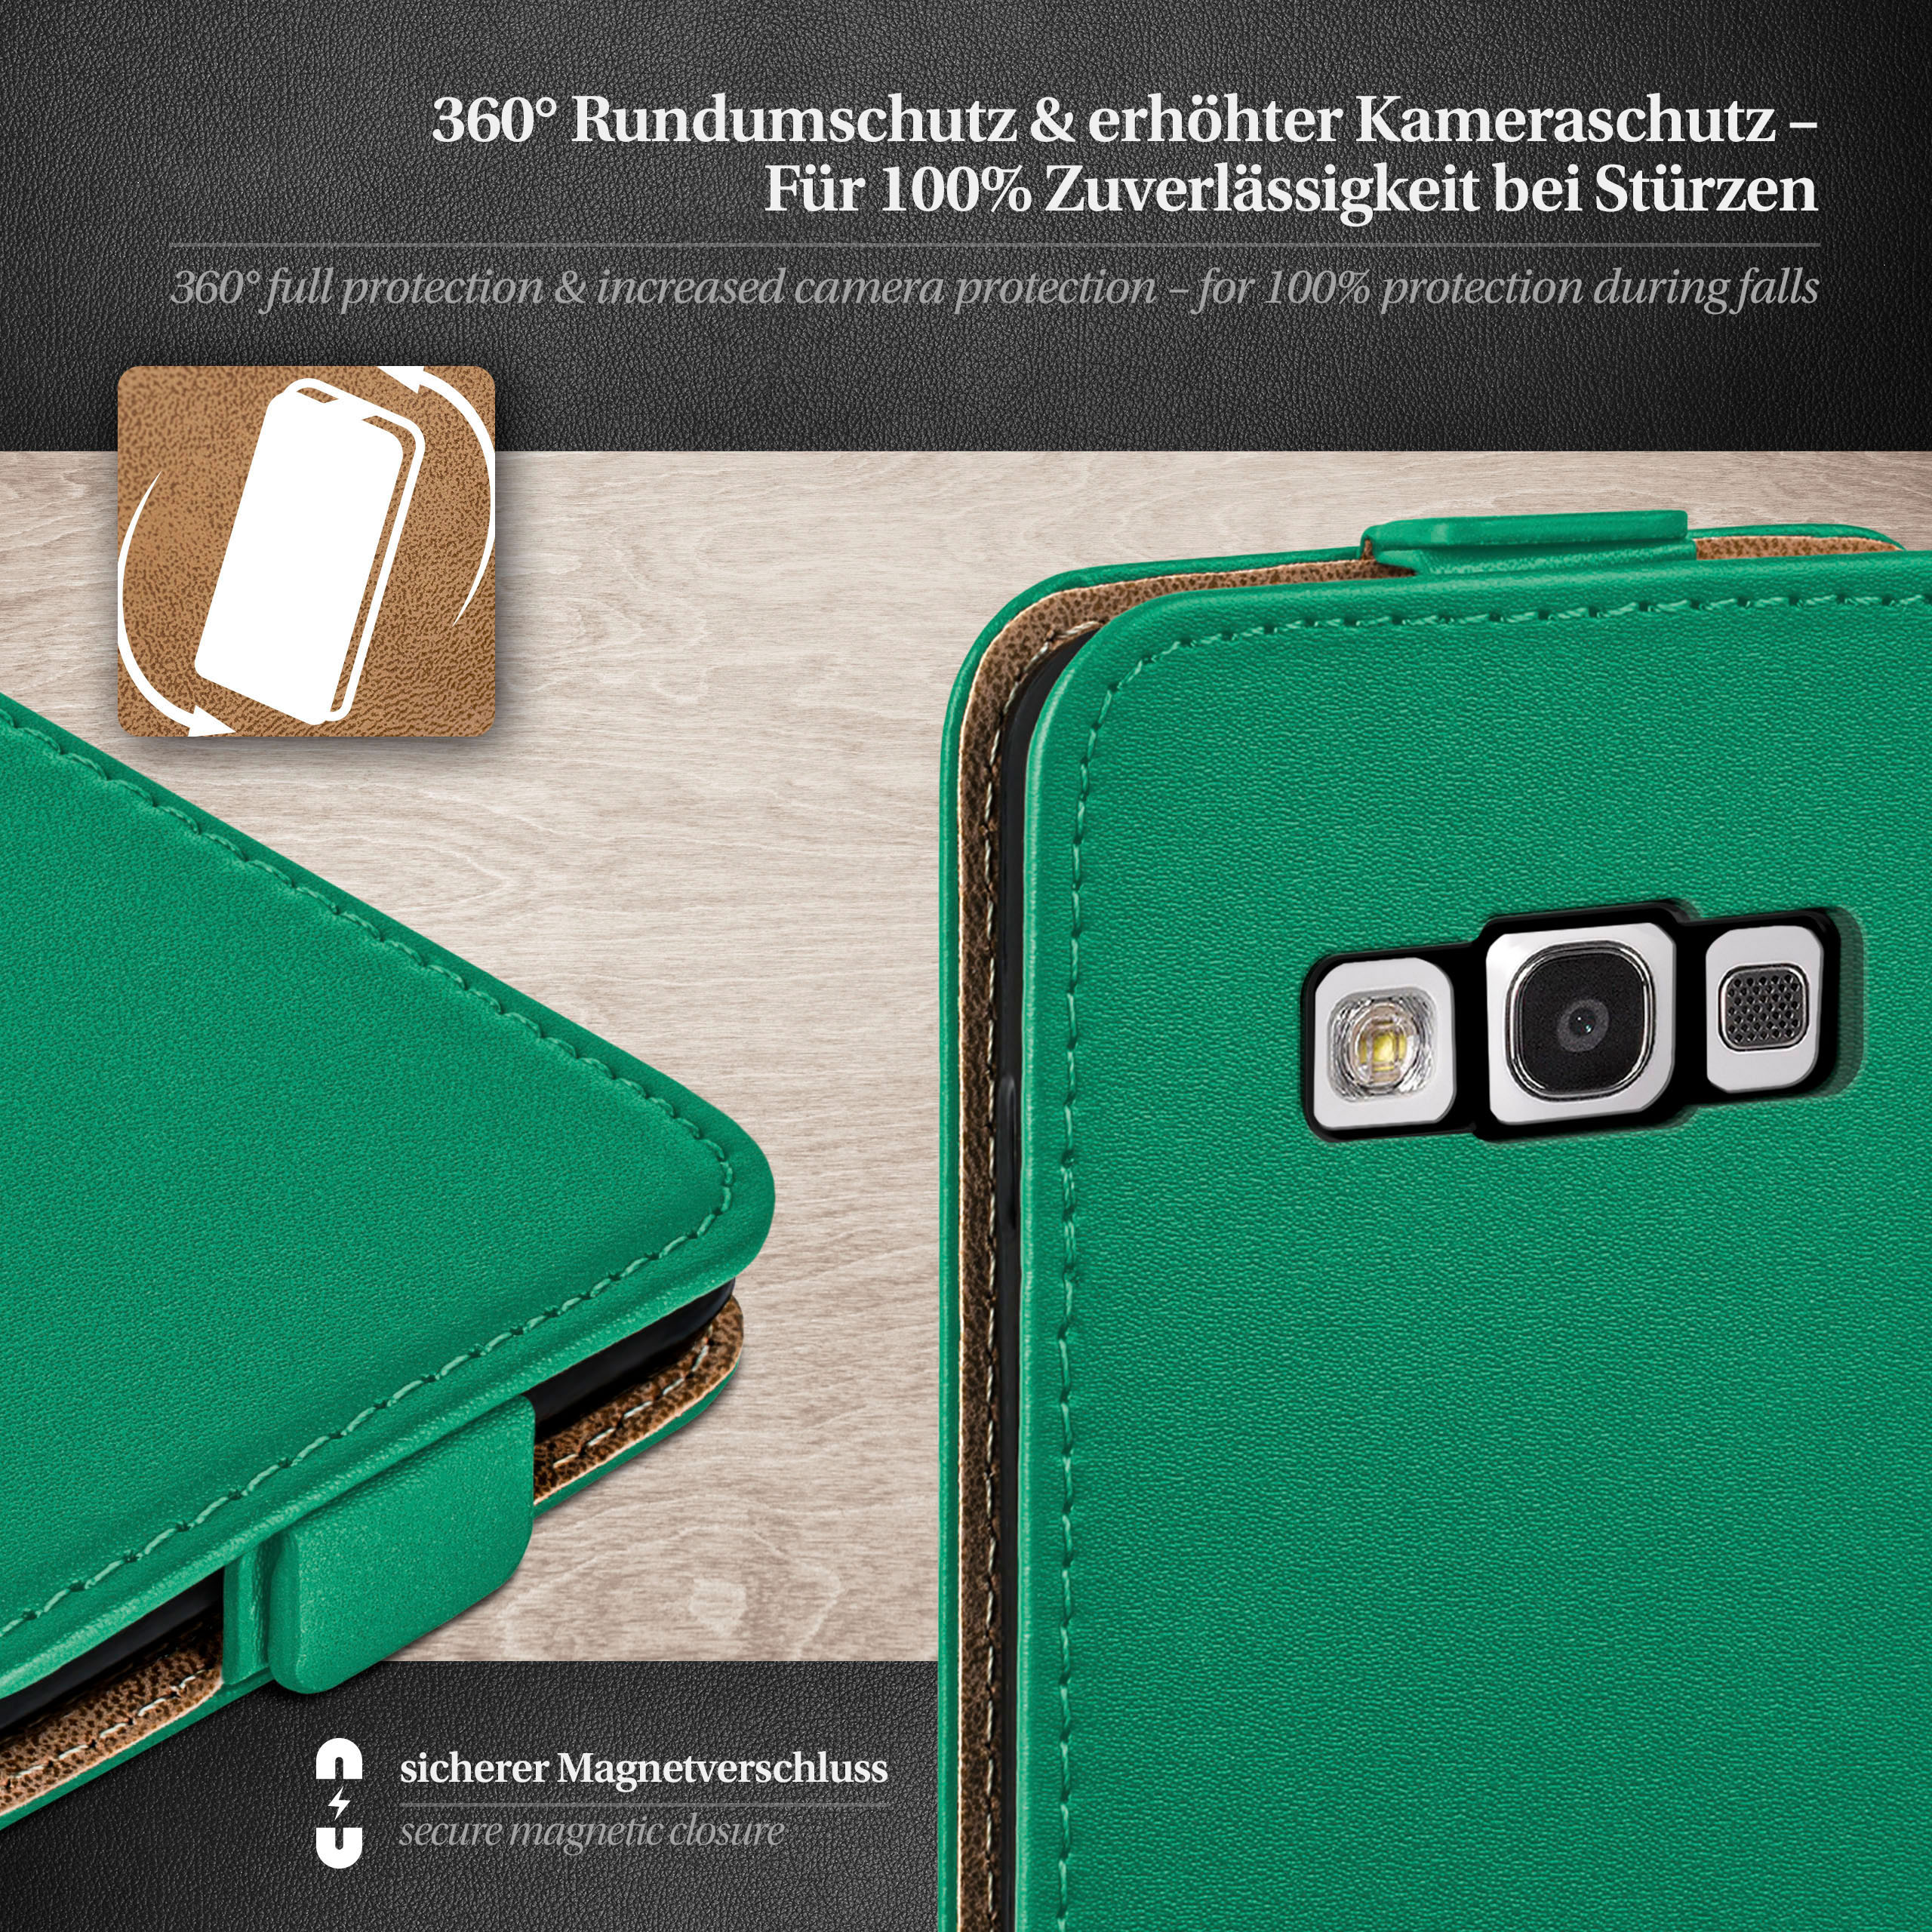 MOEX Flip Case, Flip S3 Galaxy Samsung, S3 Emerald-Green Cover, Neo, 